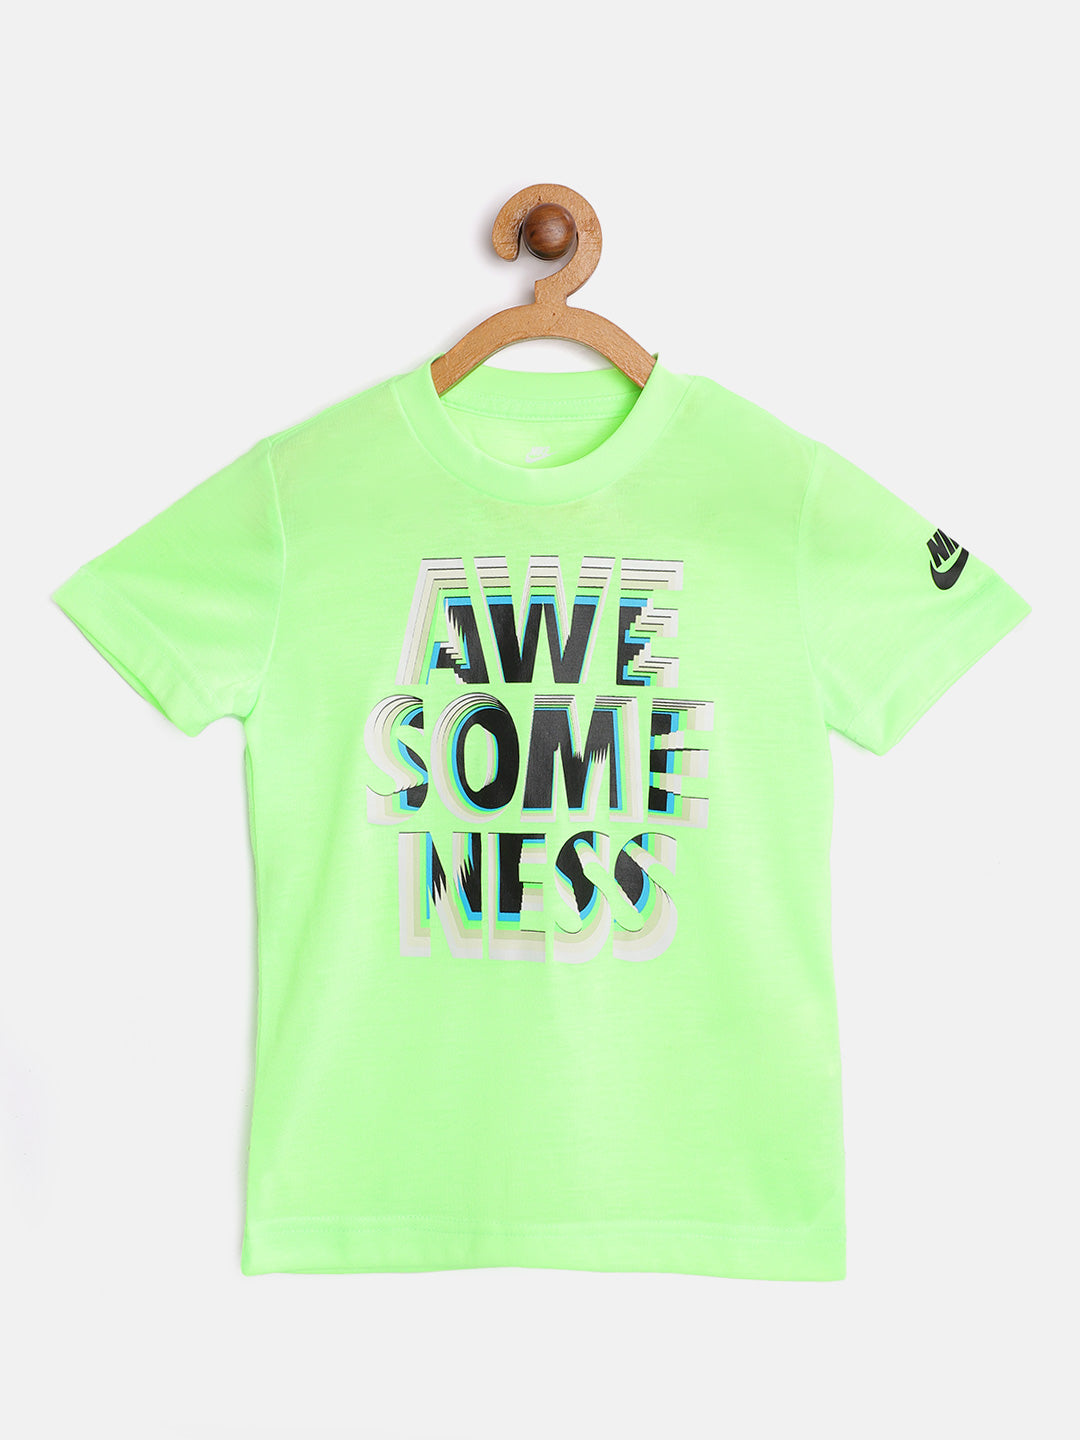 Nike Awesomeness T-Shirt T Shirt Nike   